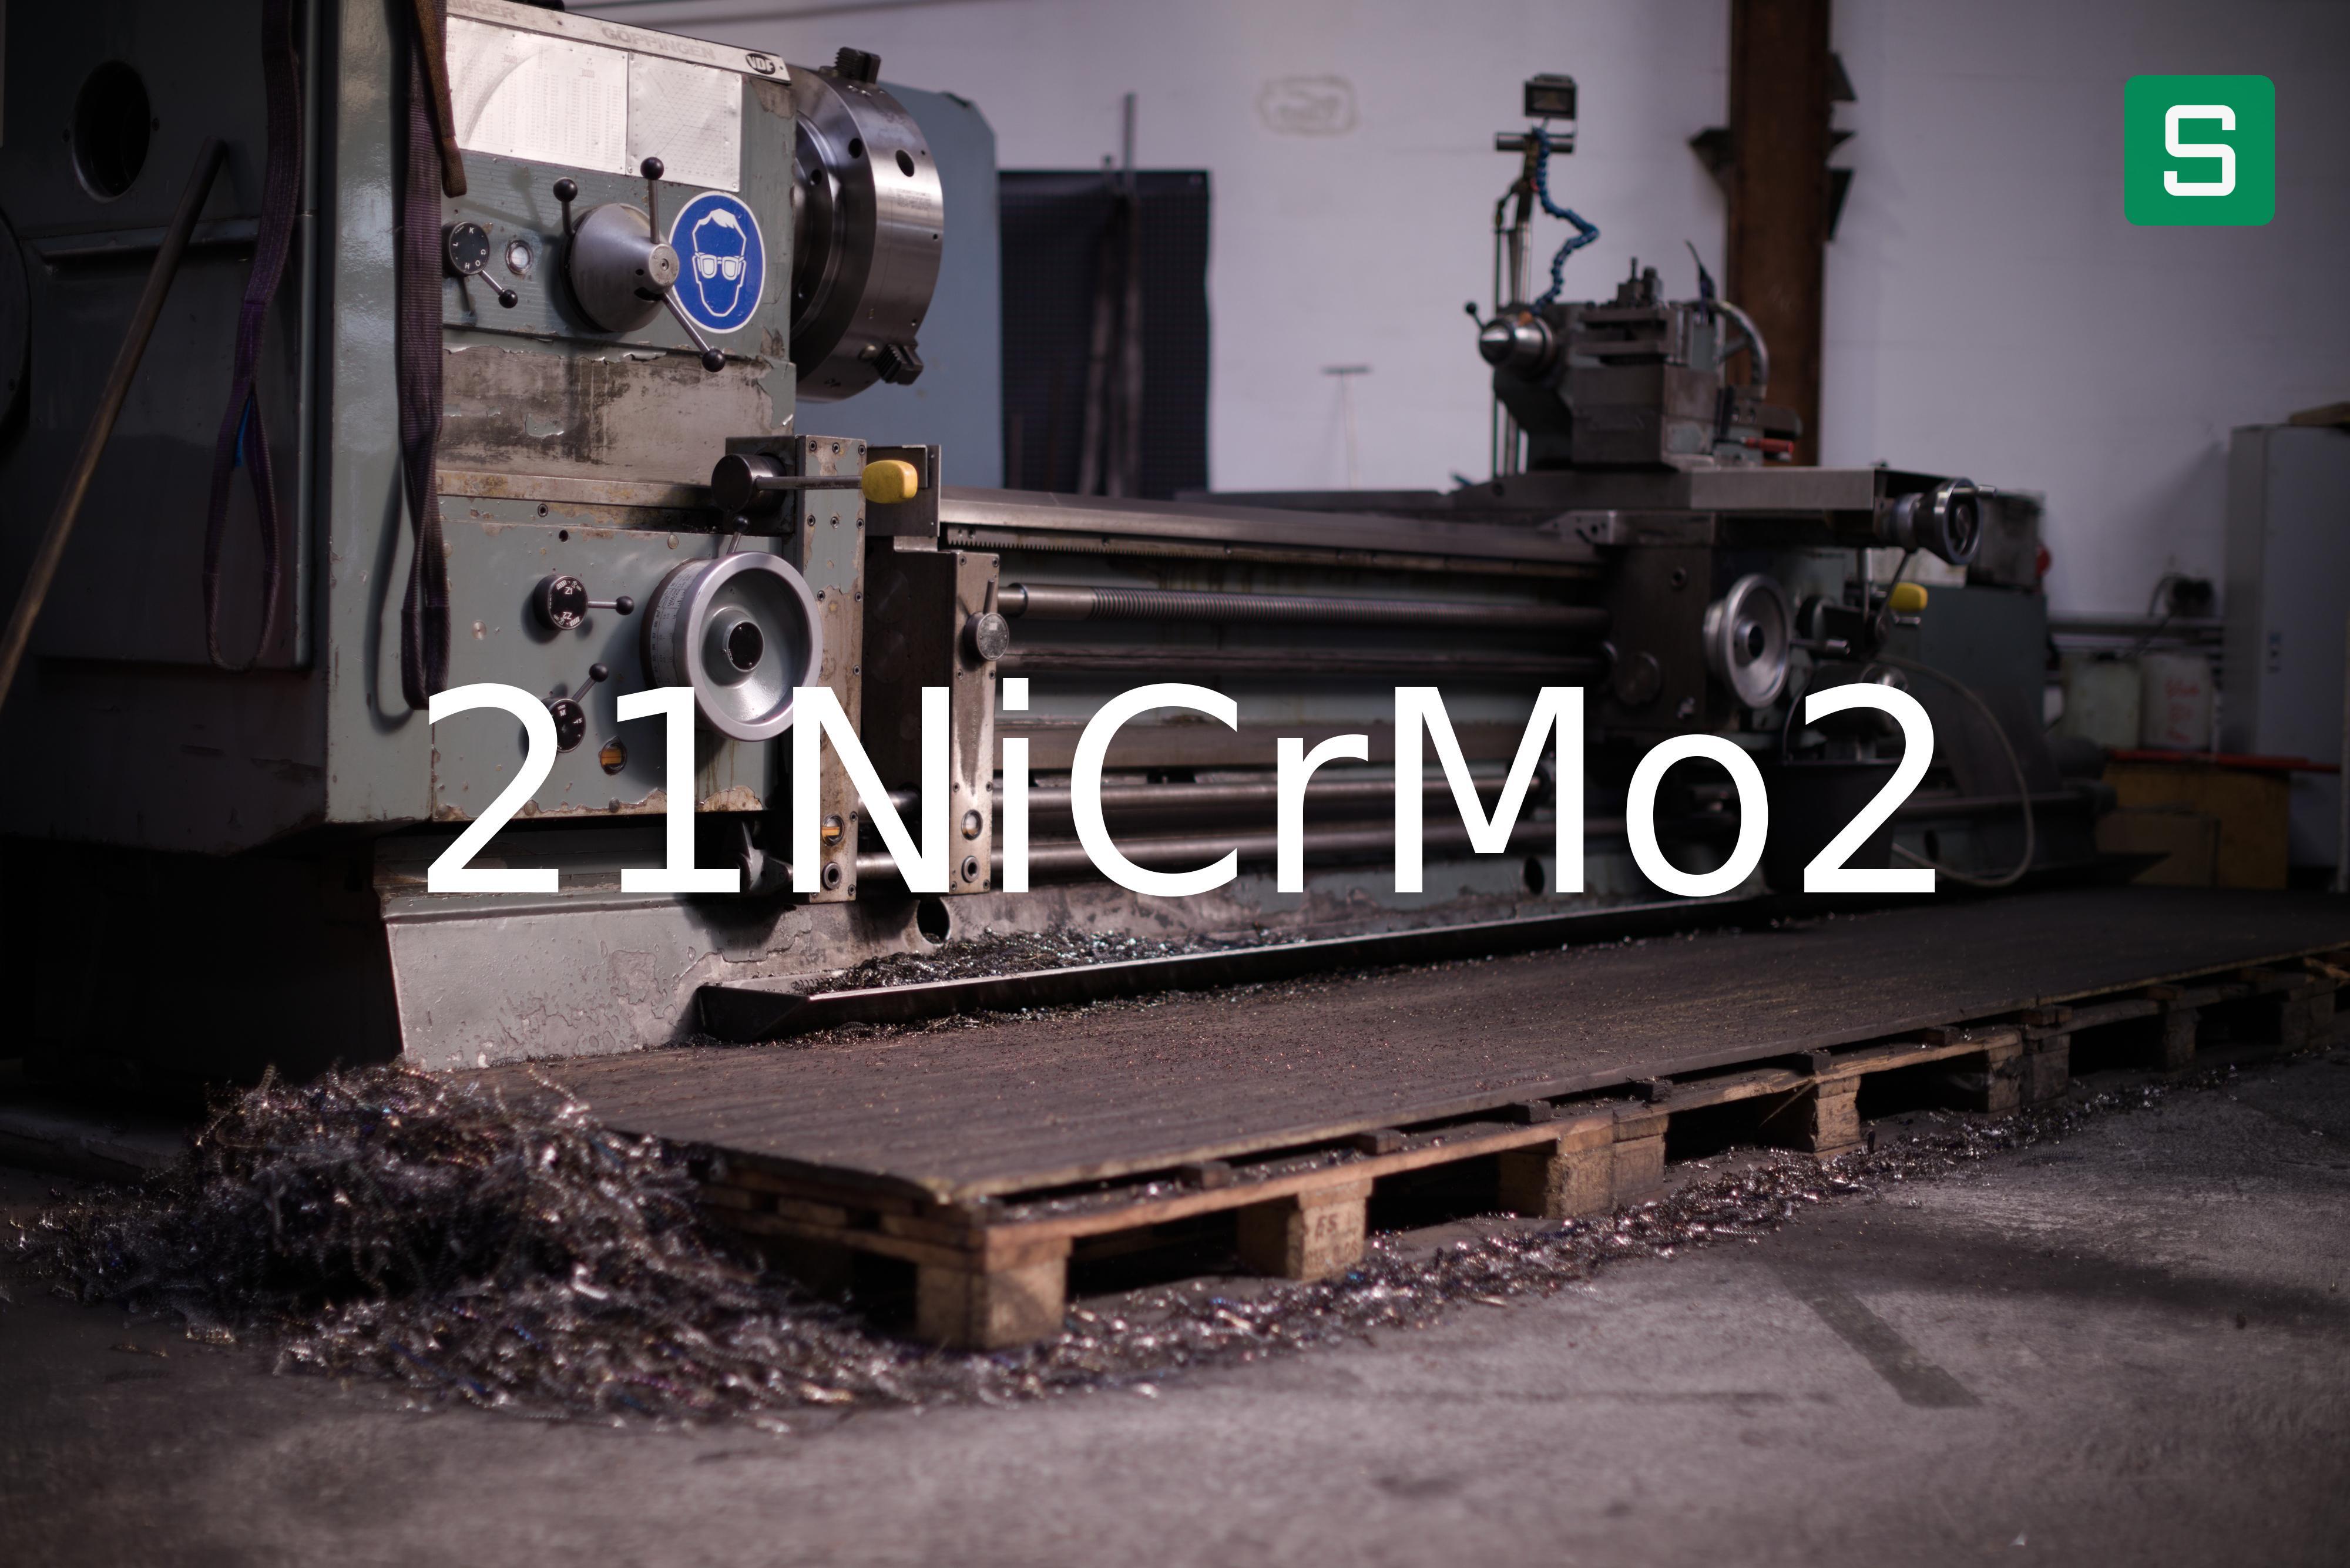 Steel Material: 21NiCrMo2